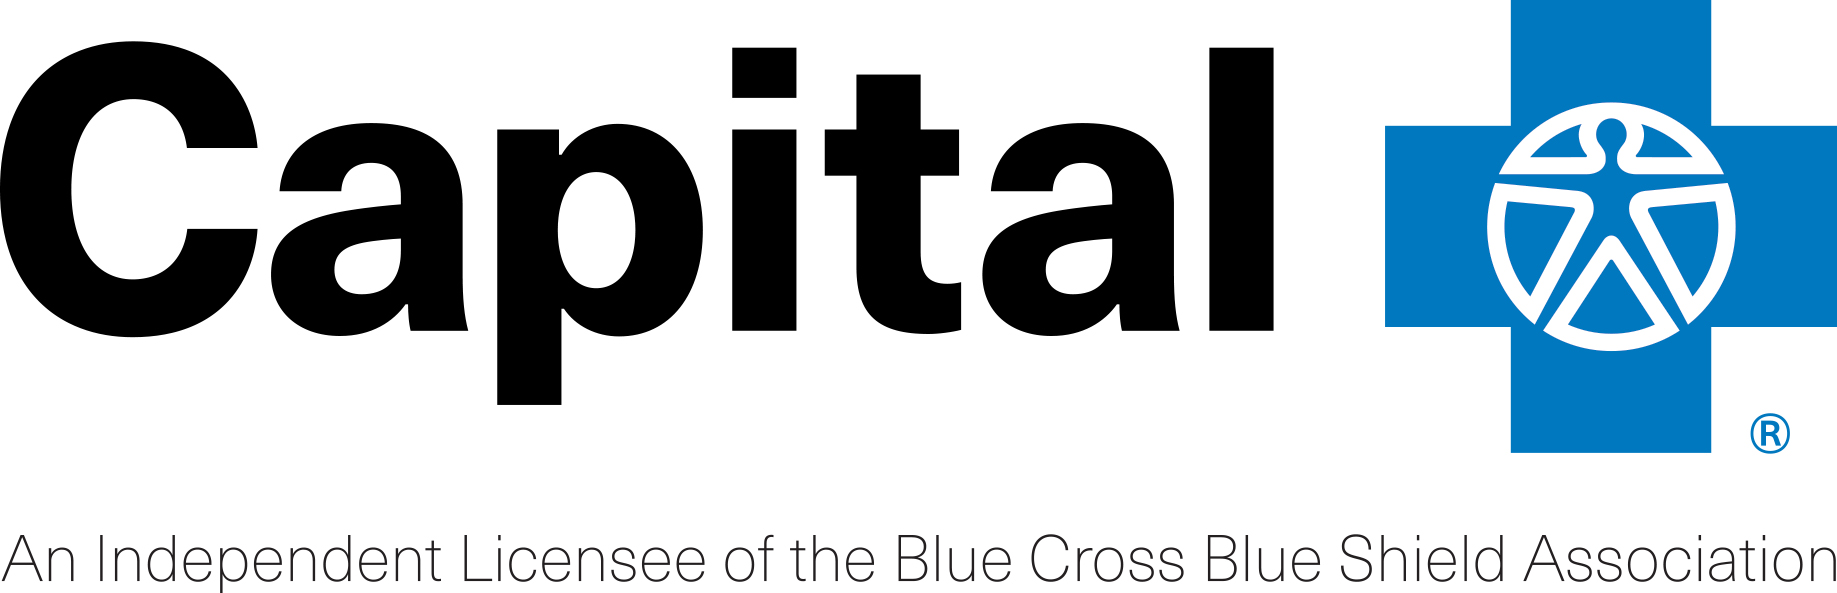 Capital Blue Cross logo